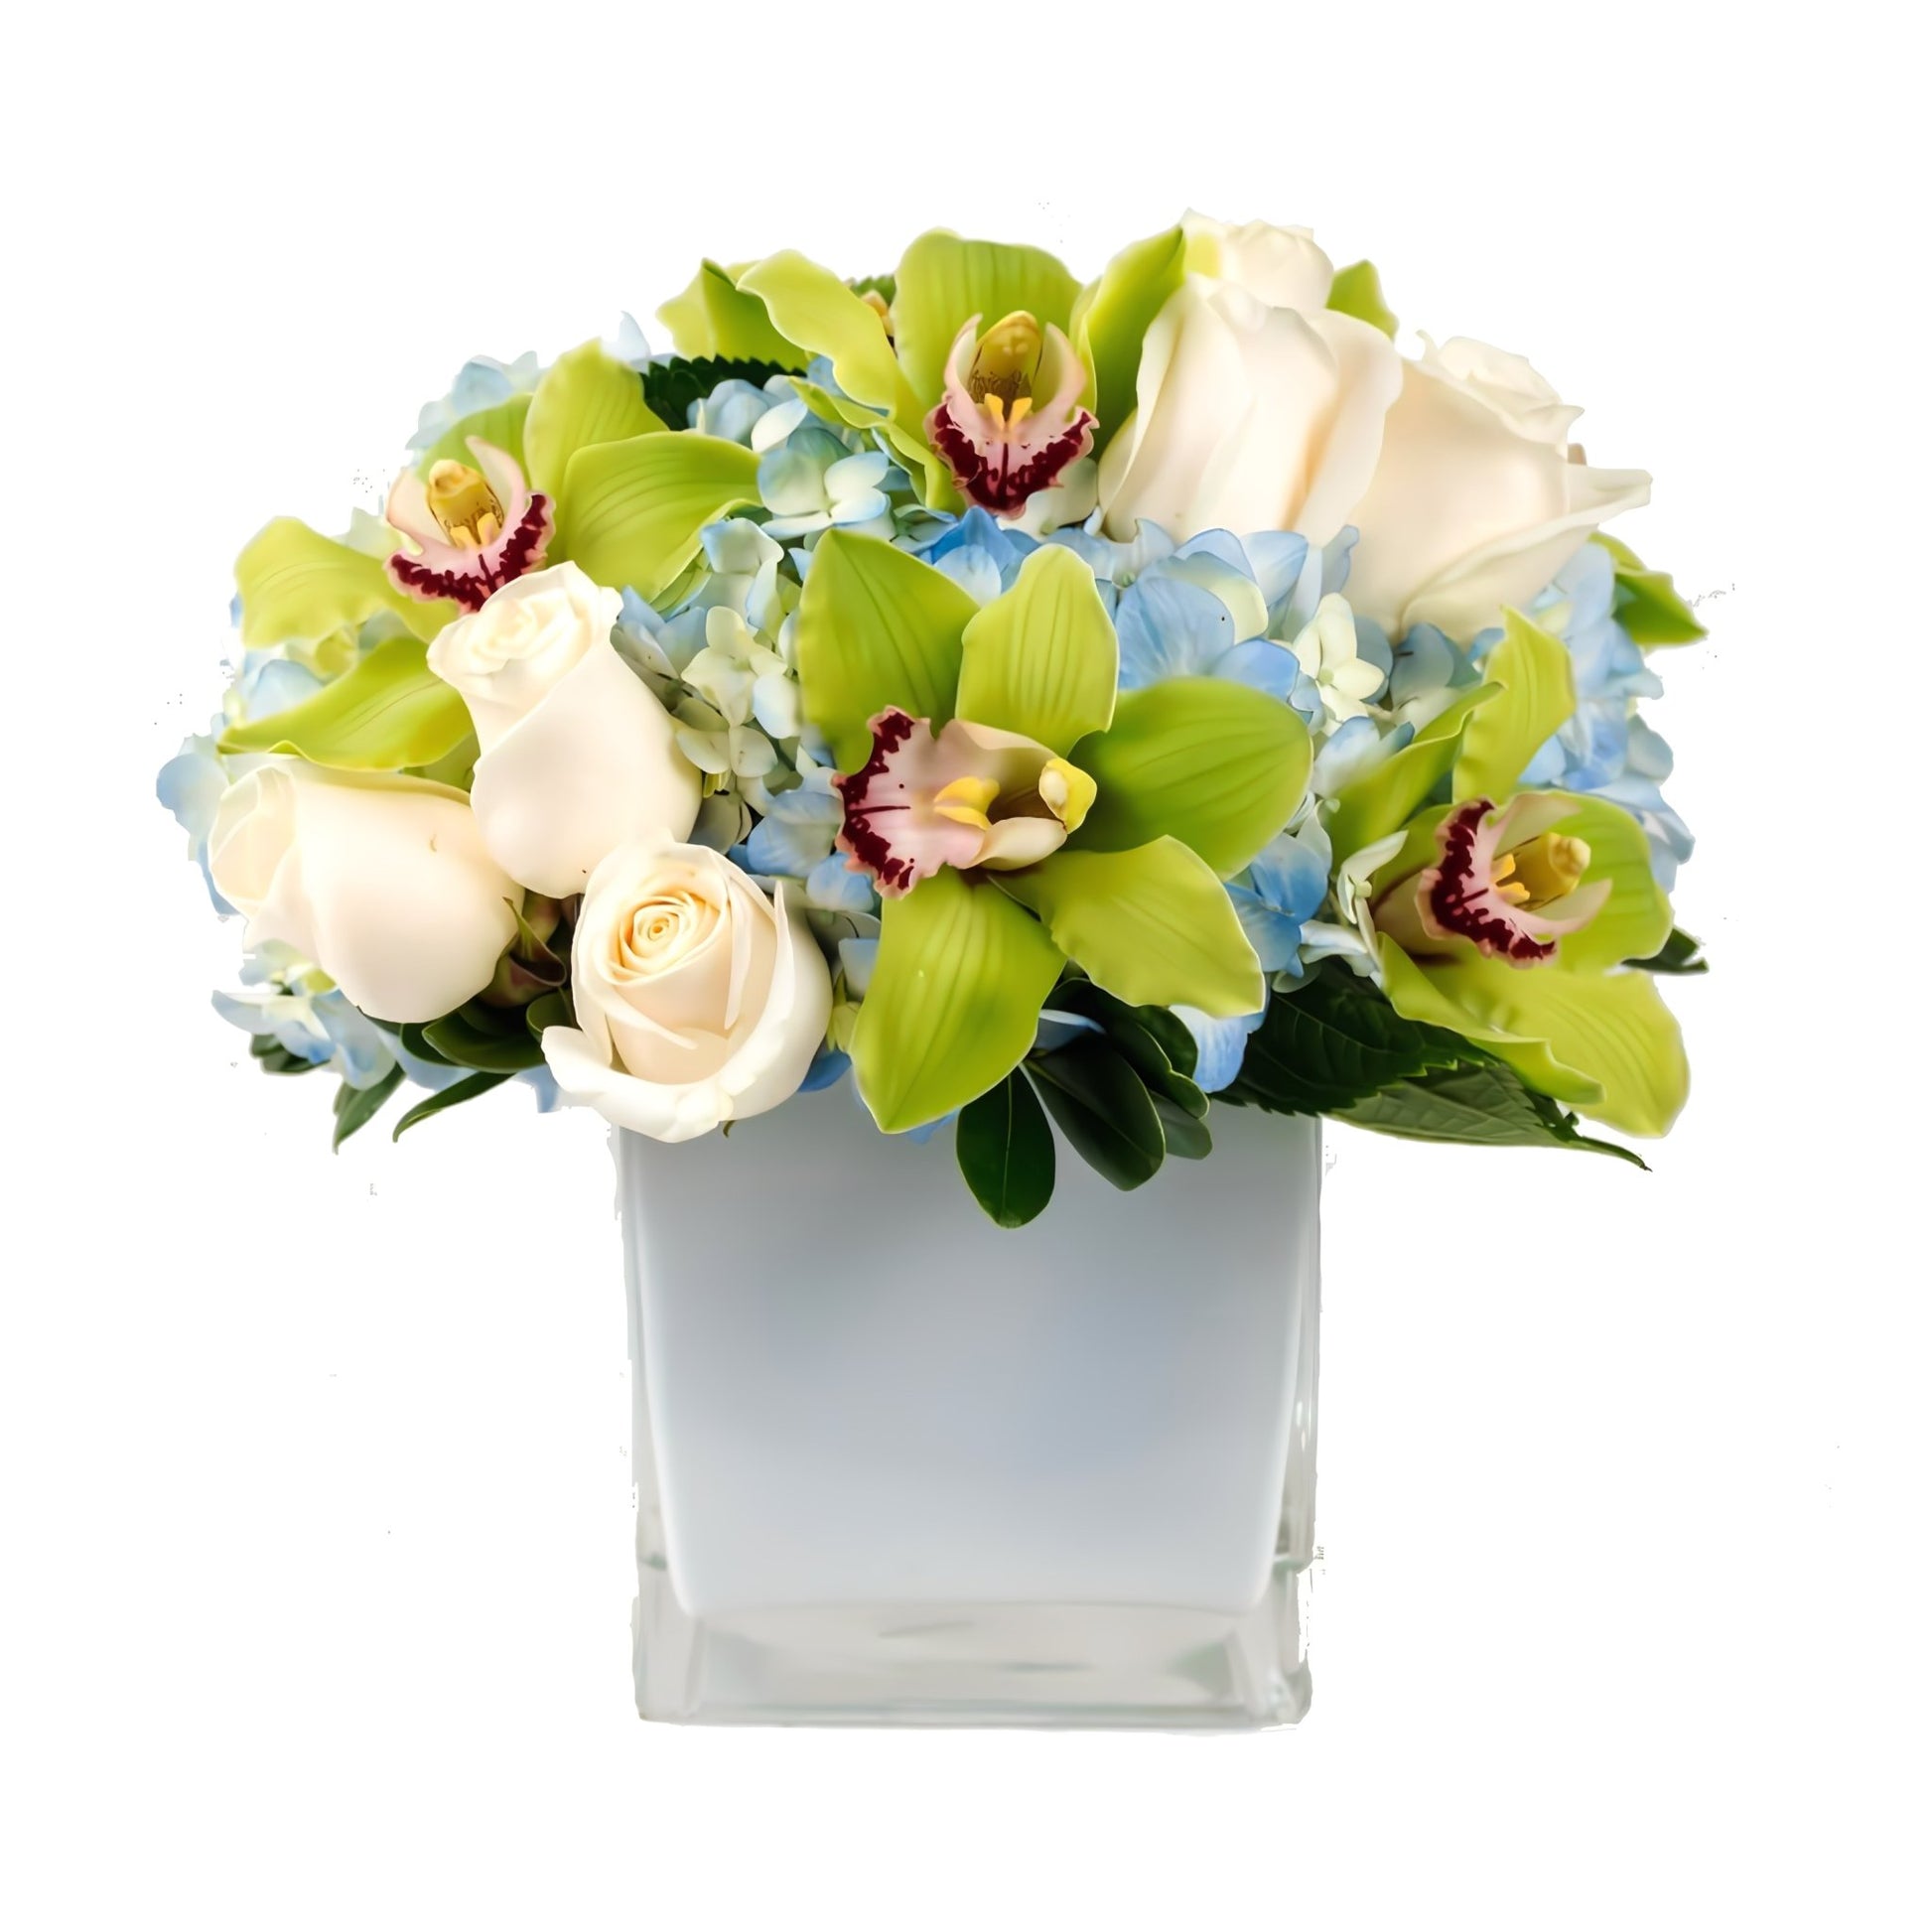 Lexington Luxury - Fresh Cut Flowers - Queens Flower Delivery